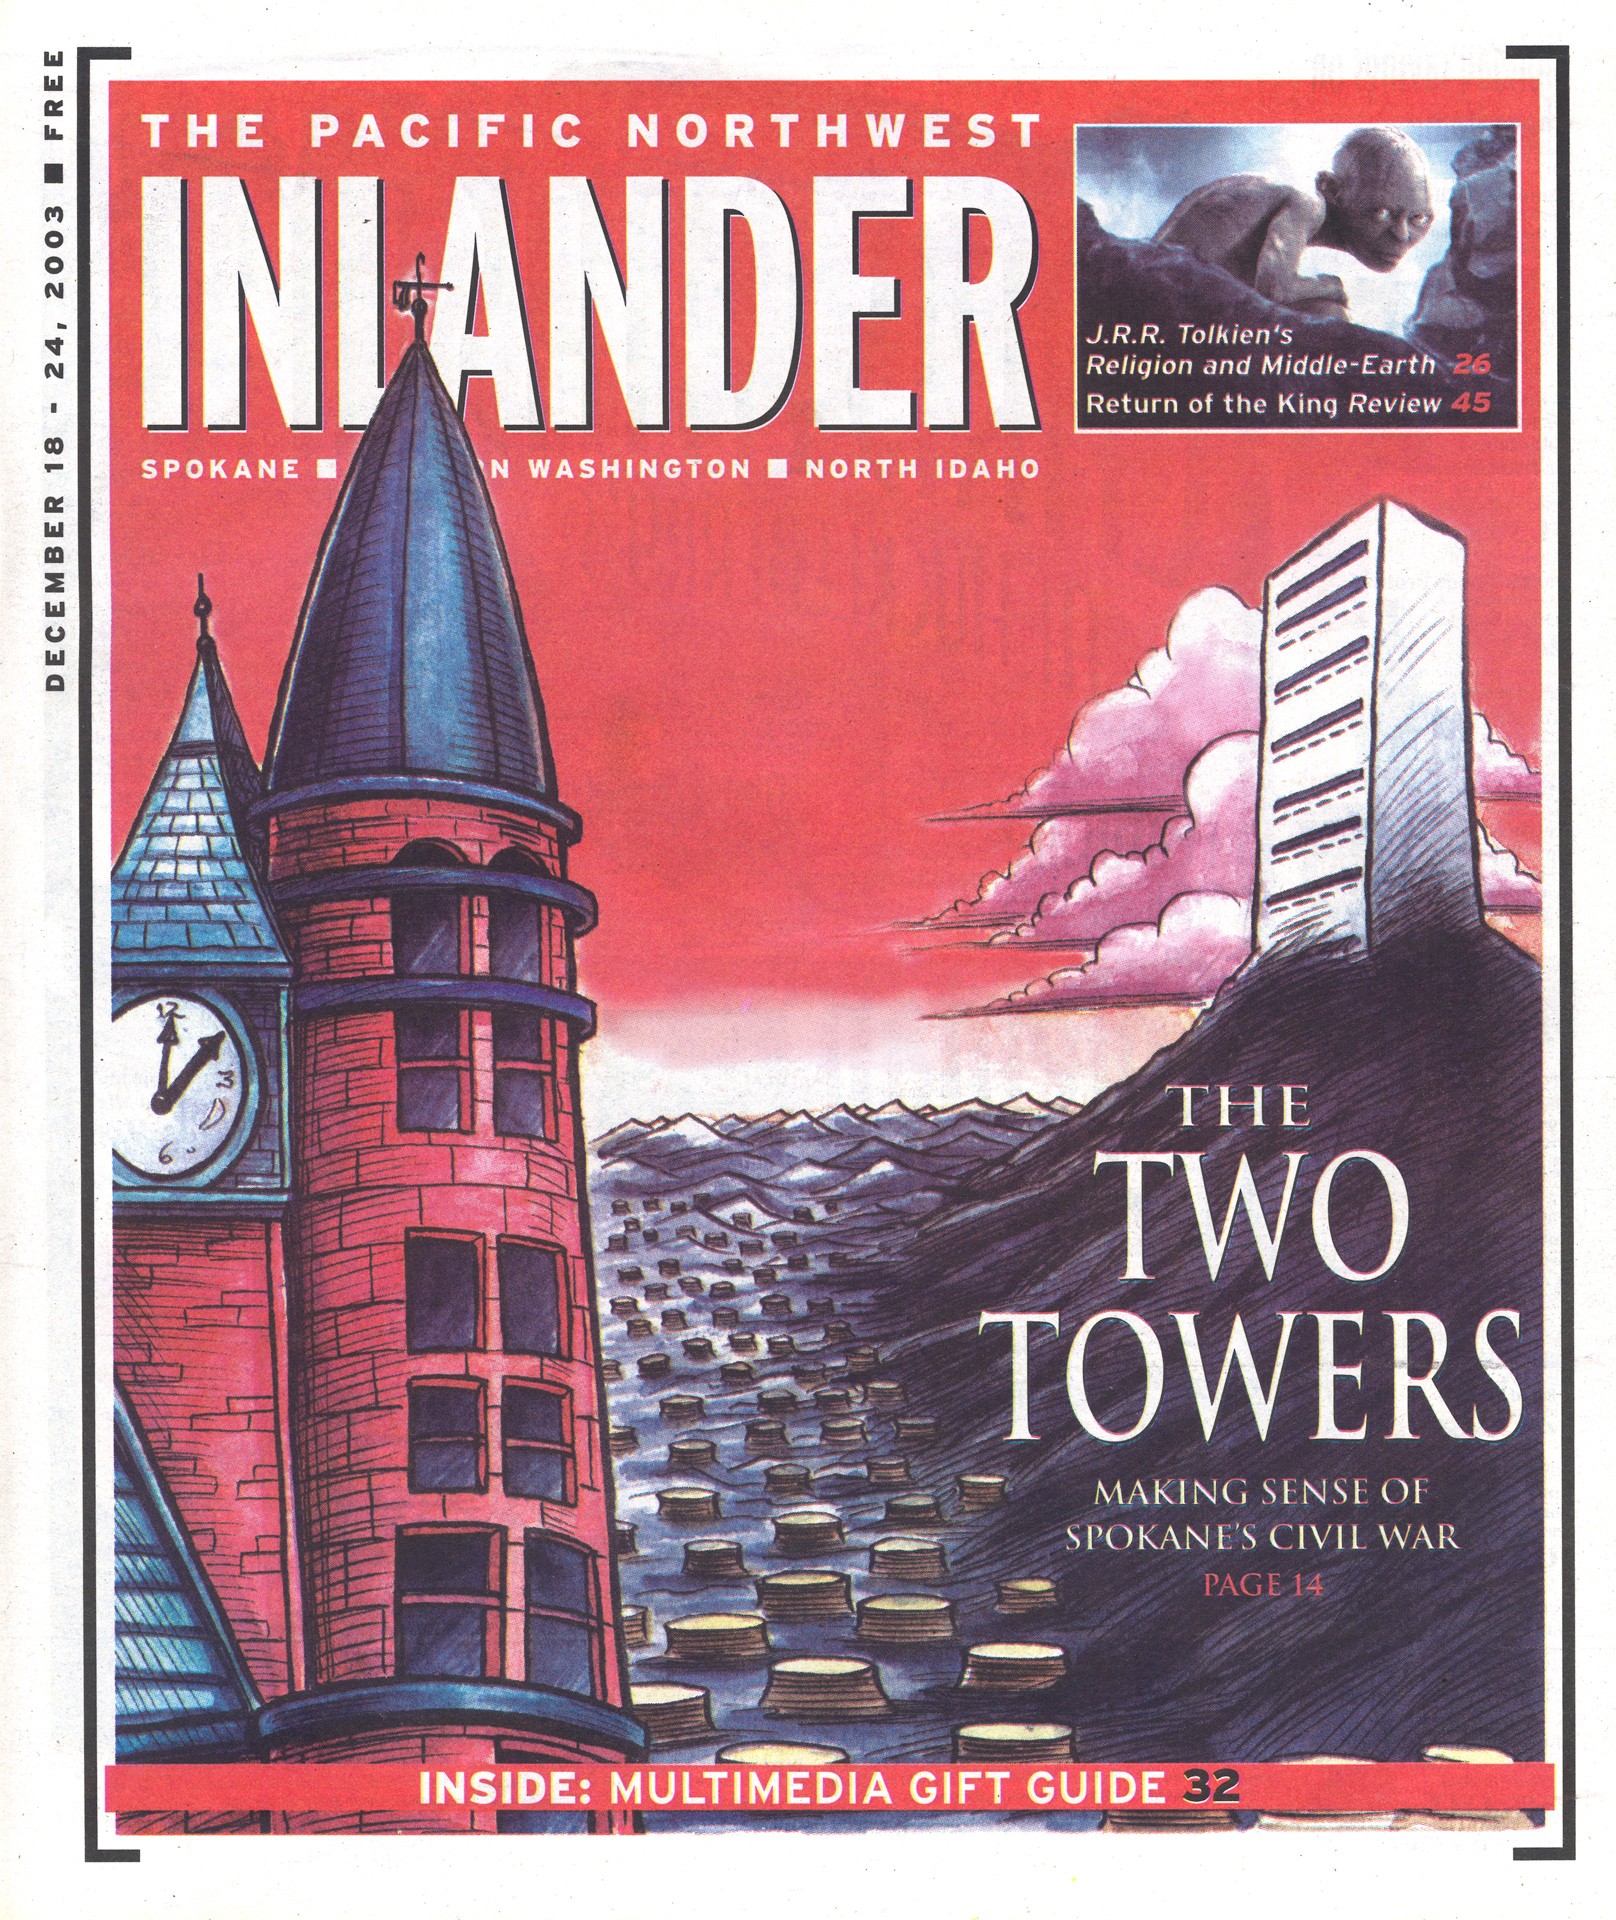 30 Years Of Inlander 2003 2004 Local News Spokane The Pacific Northwest Inlander News